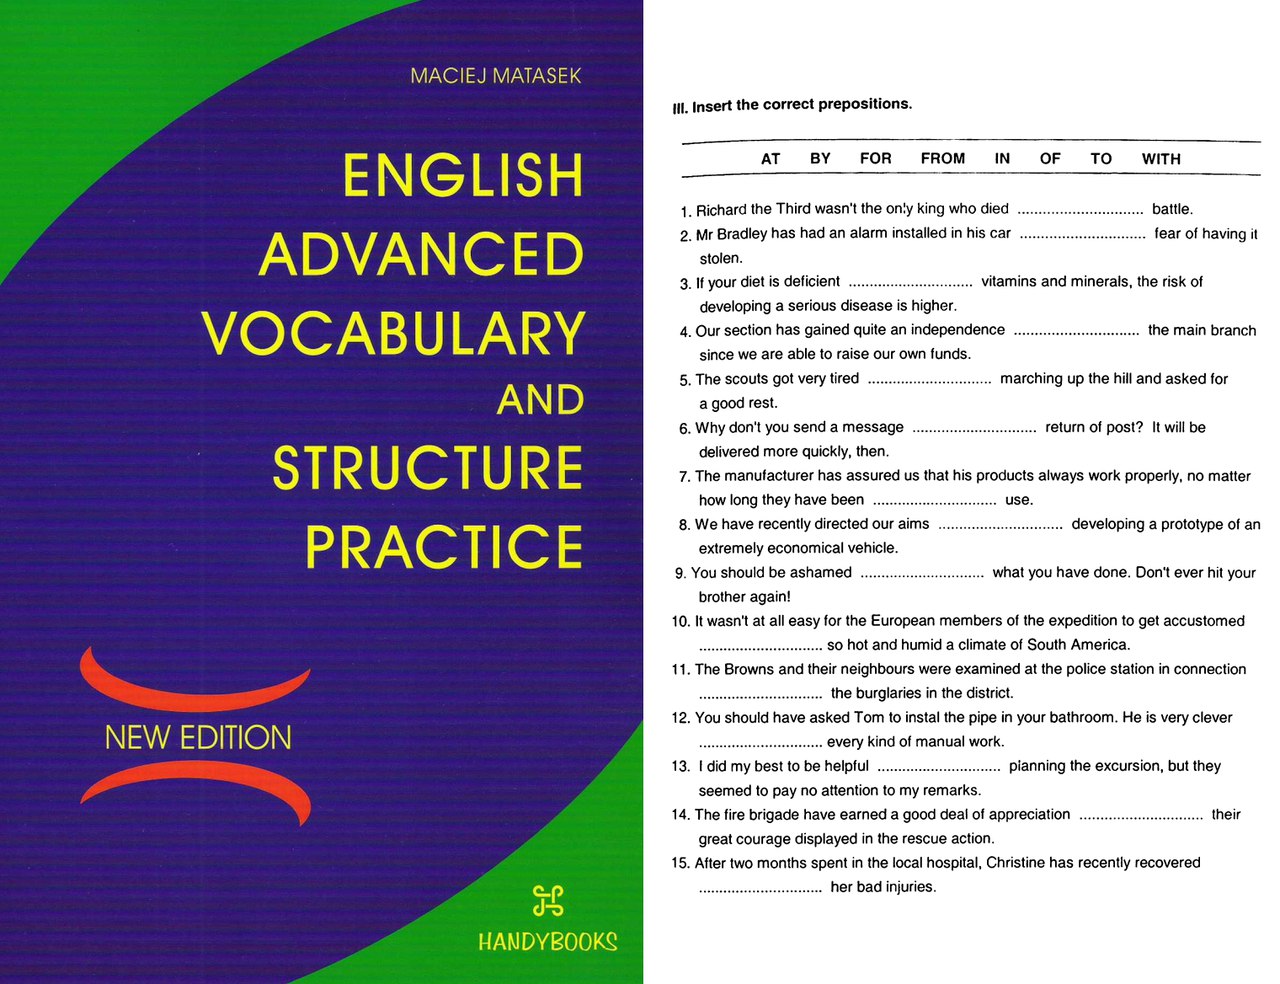 Practice english vocabulary. English Advanced Vocabulary and structure Practice. Advancing Vocabulary. Английский Advanced. Practice English Vocabulary Advanced.